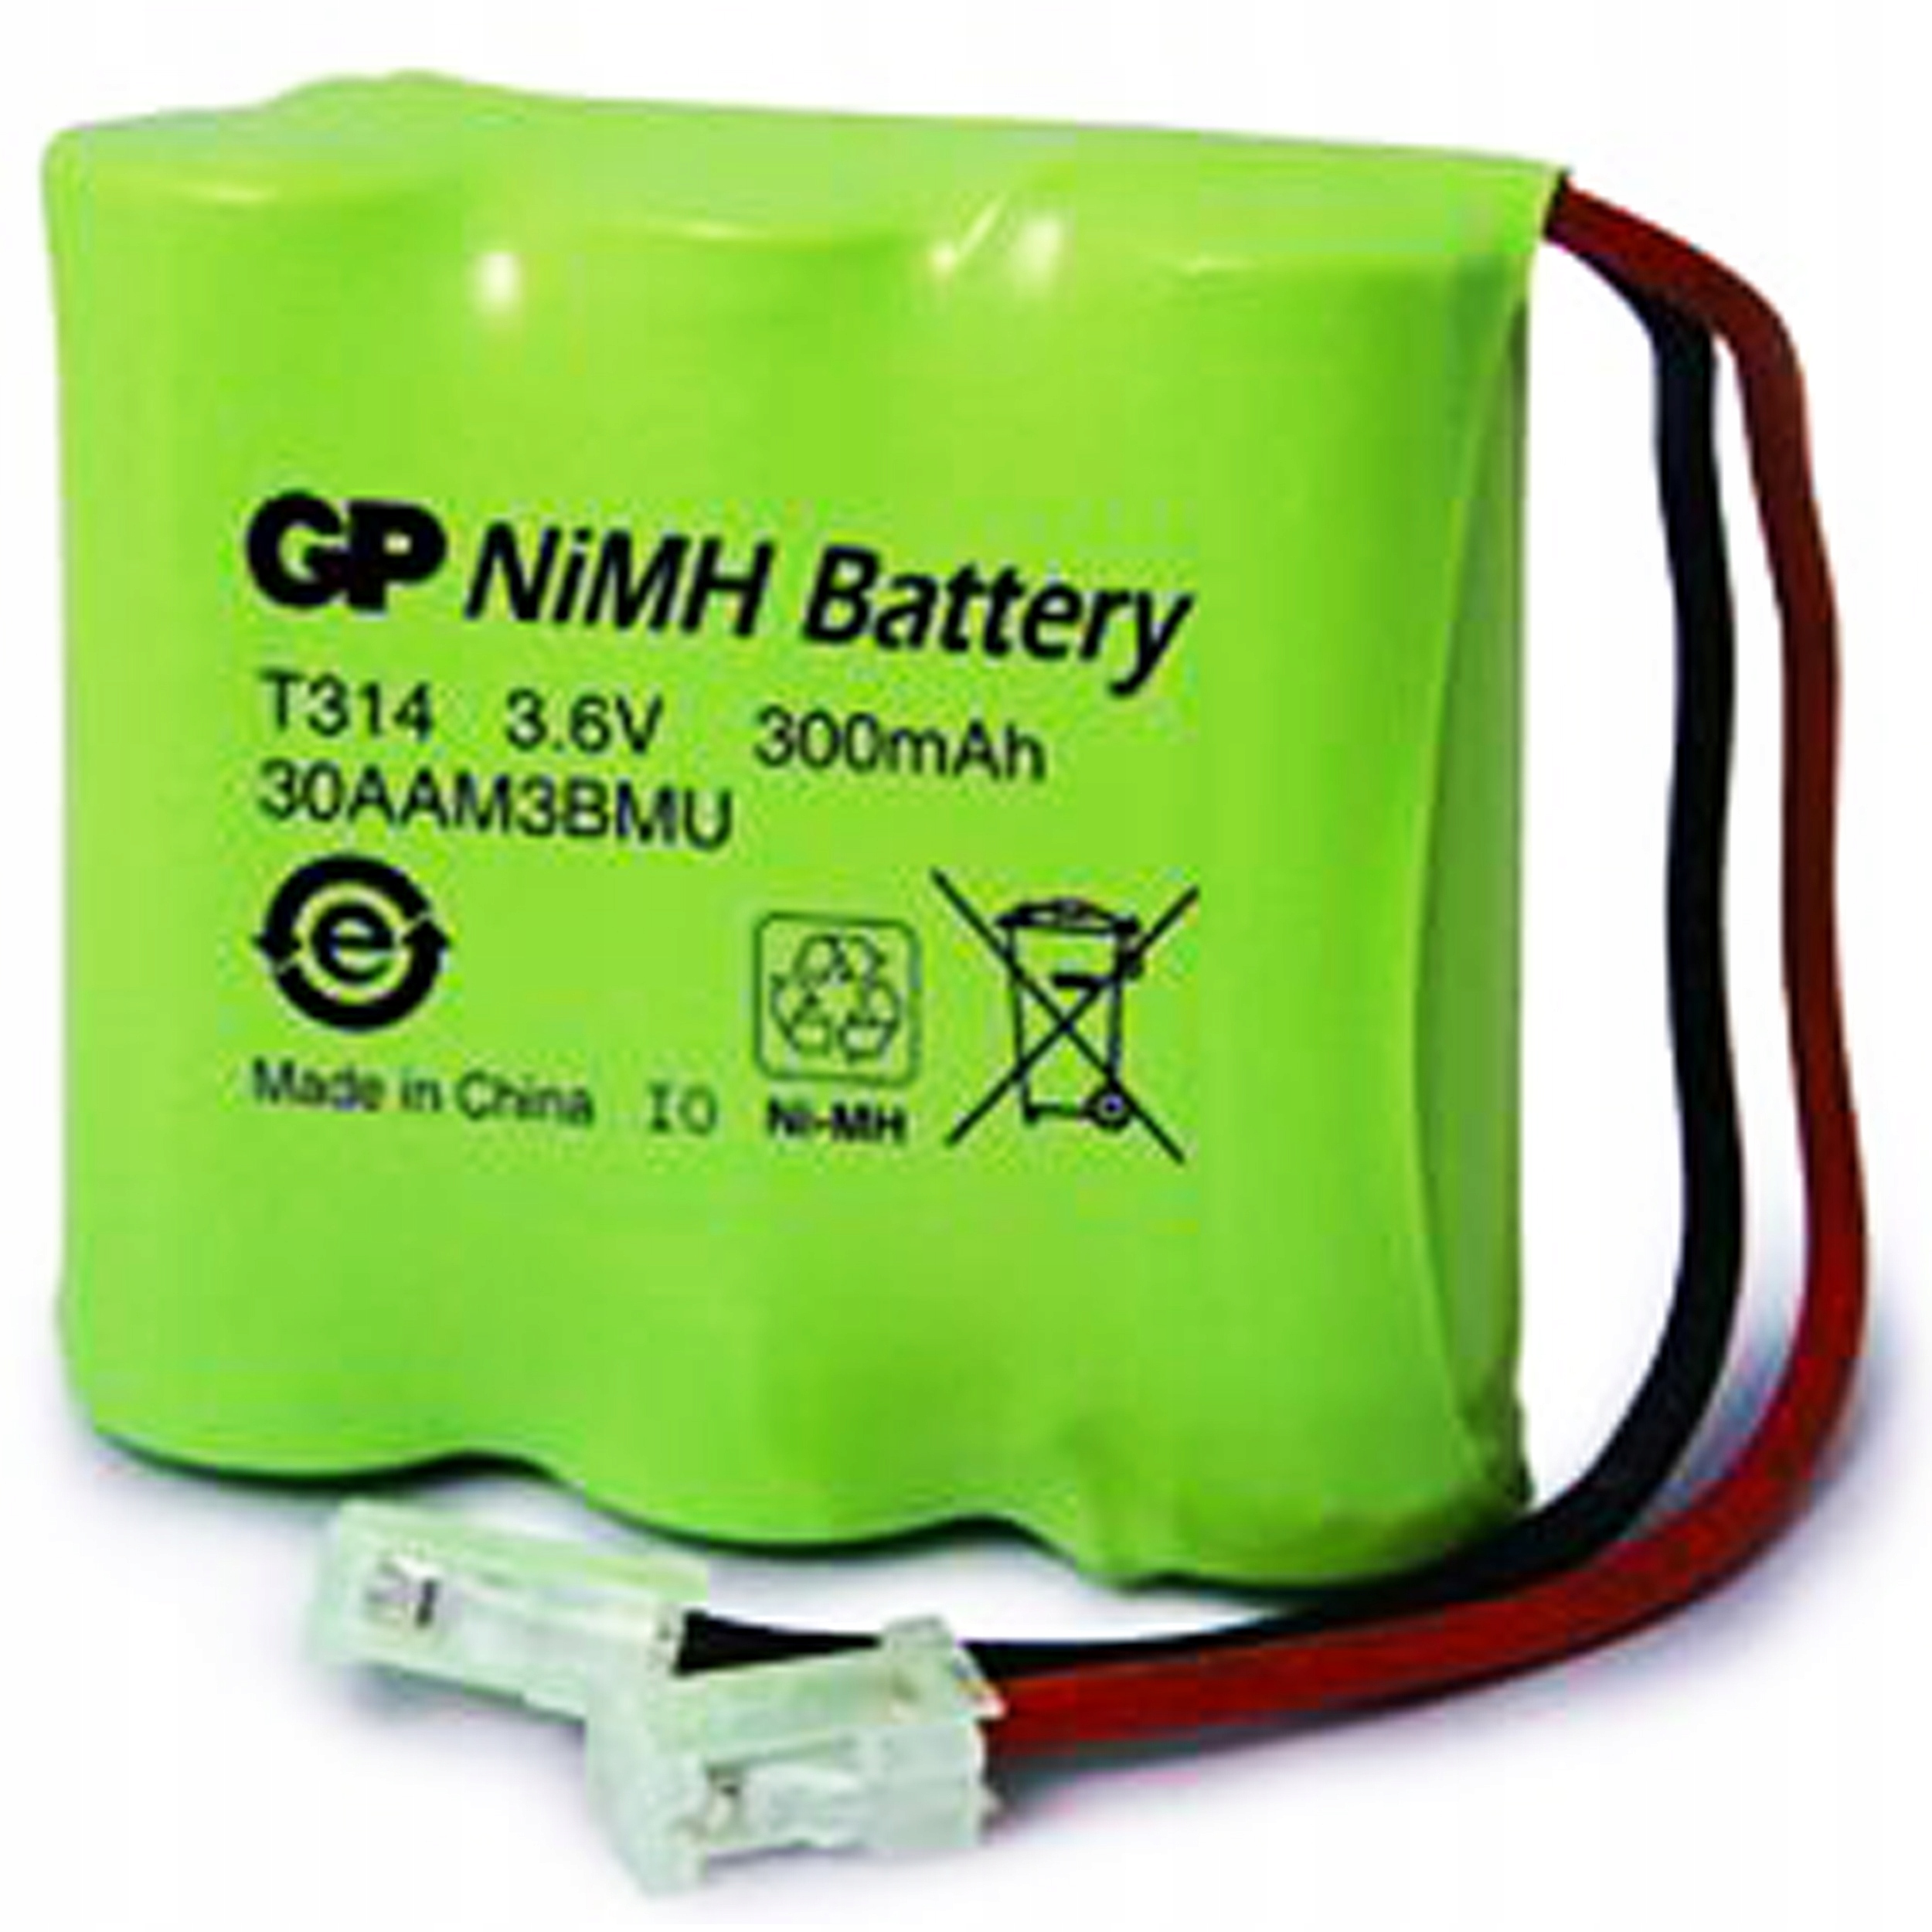 Battery t. Аккумулятор ni-MH 3.6V 300mah для ru 21816ge4-a. Аккумулятор t314. GP батарейки 6v для СТВС. GP ni CD Battery 3.6v 300mah.